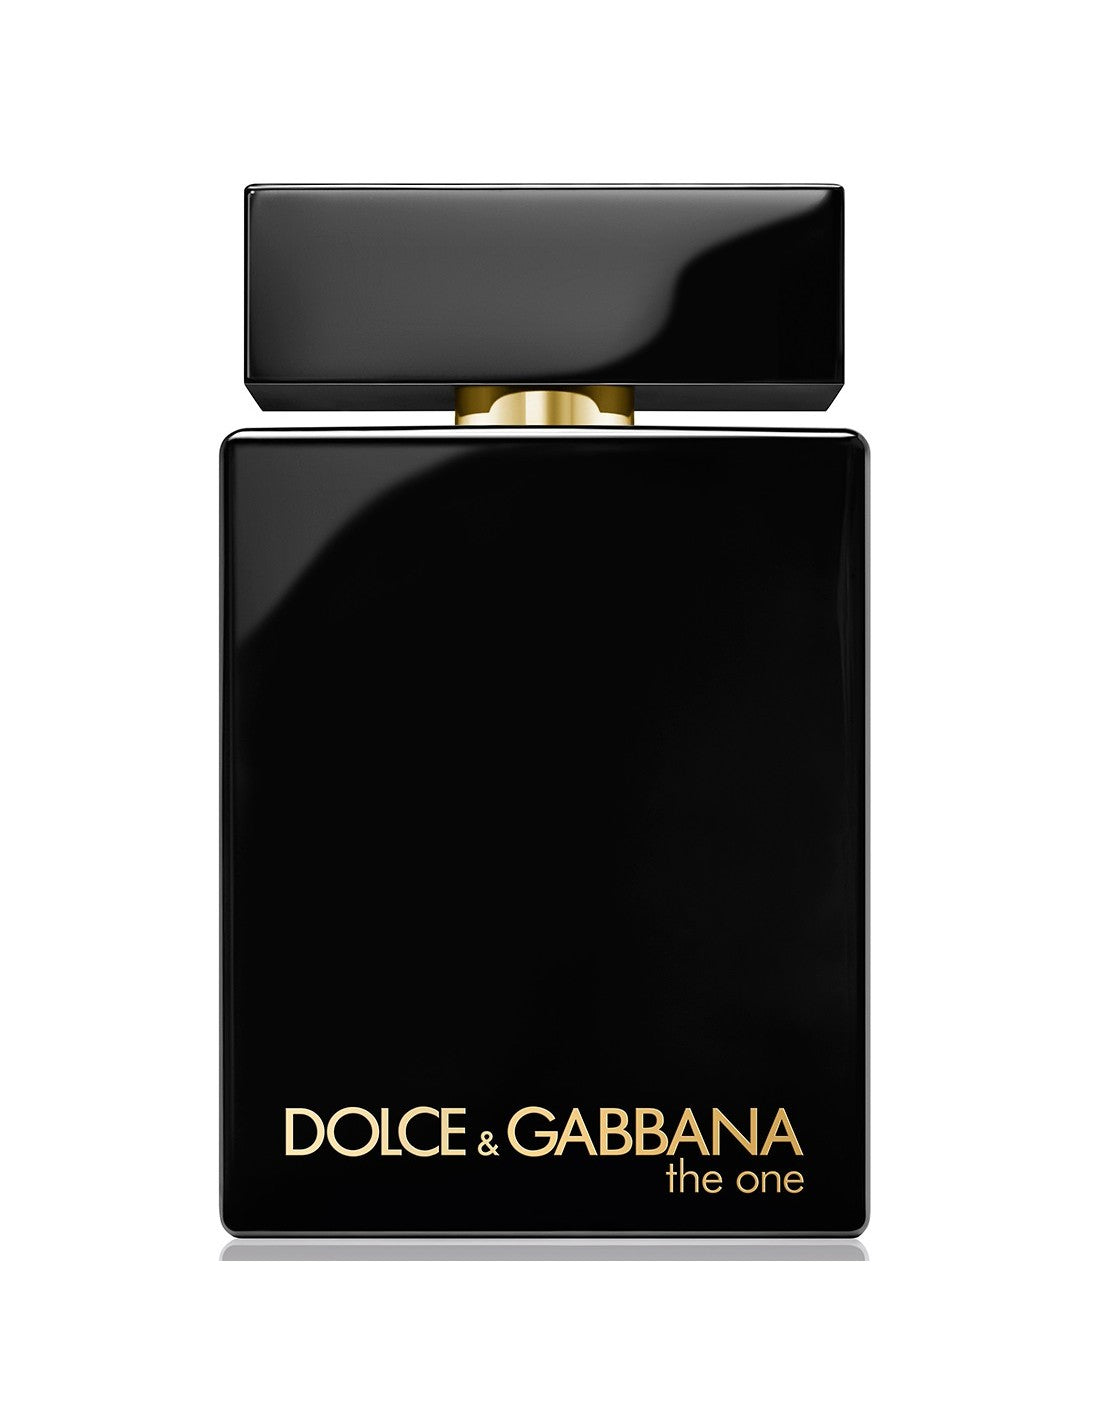 Dolce and Gabbana The One For Men Eau de Parfum Intense Spray 100 ml